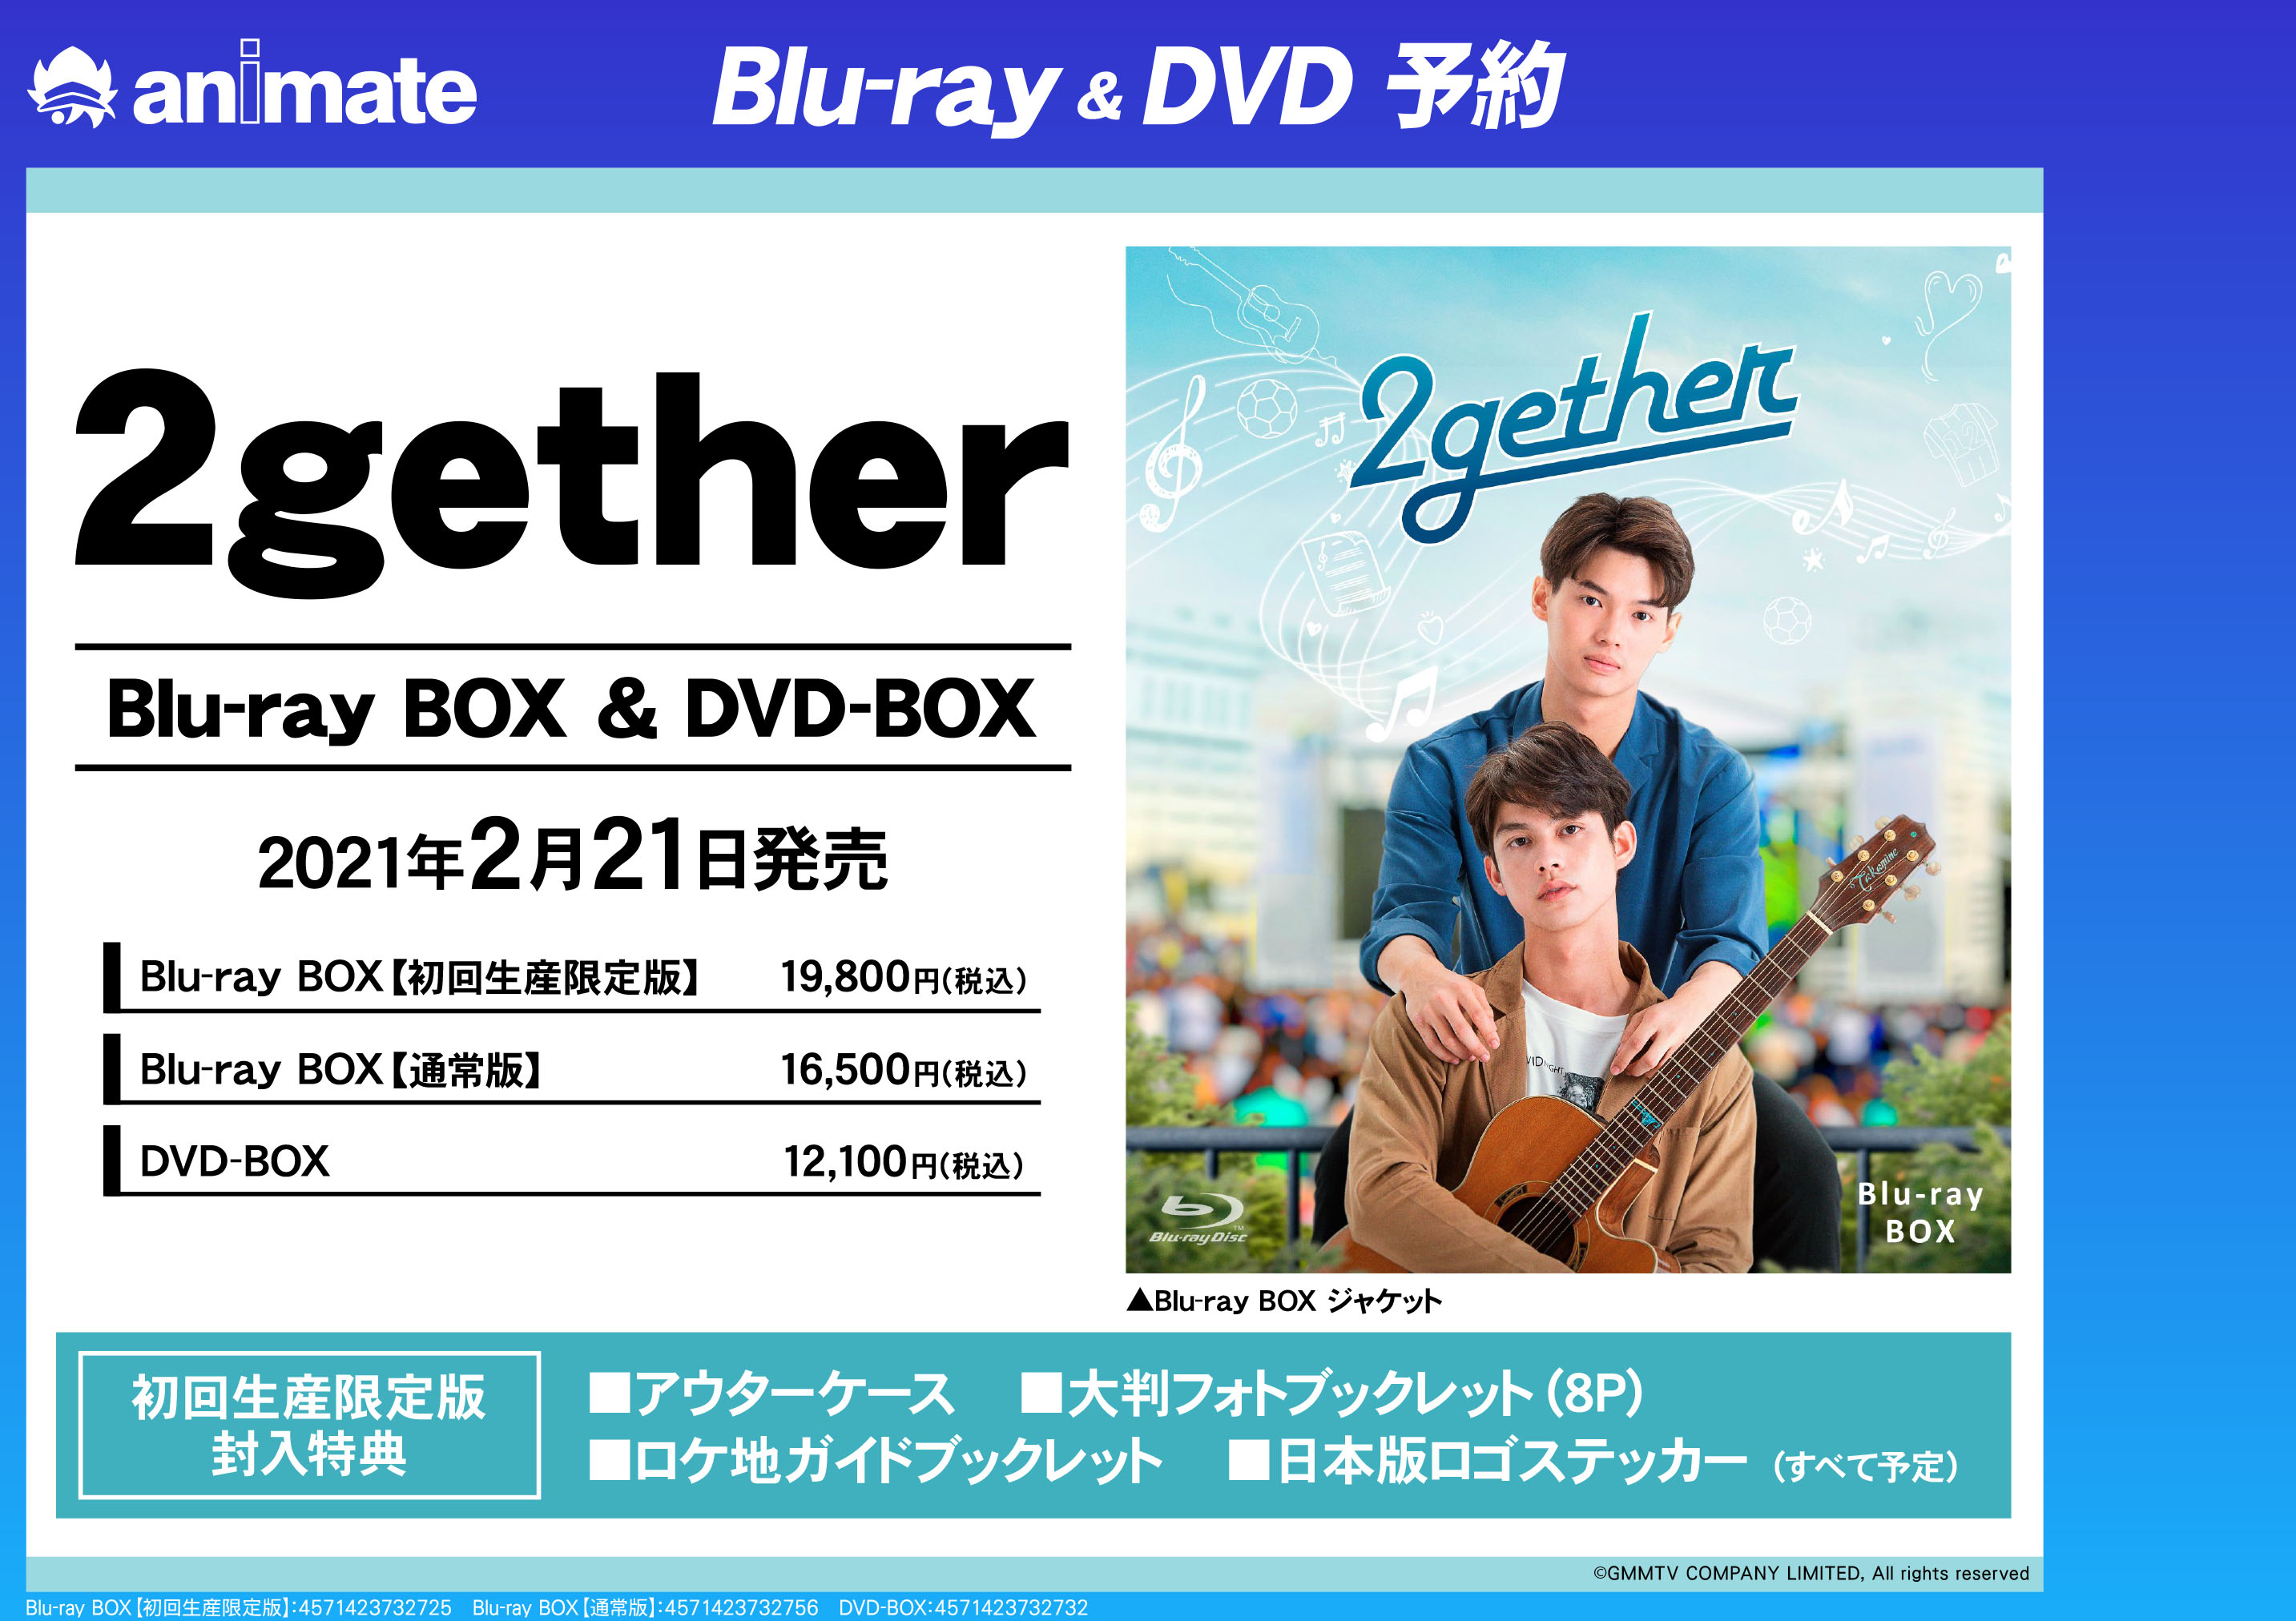 2gether Blu-ray BOX 初回生産限定版・3枚組